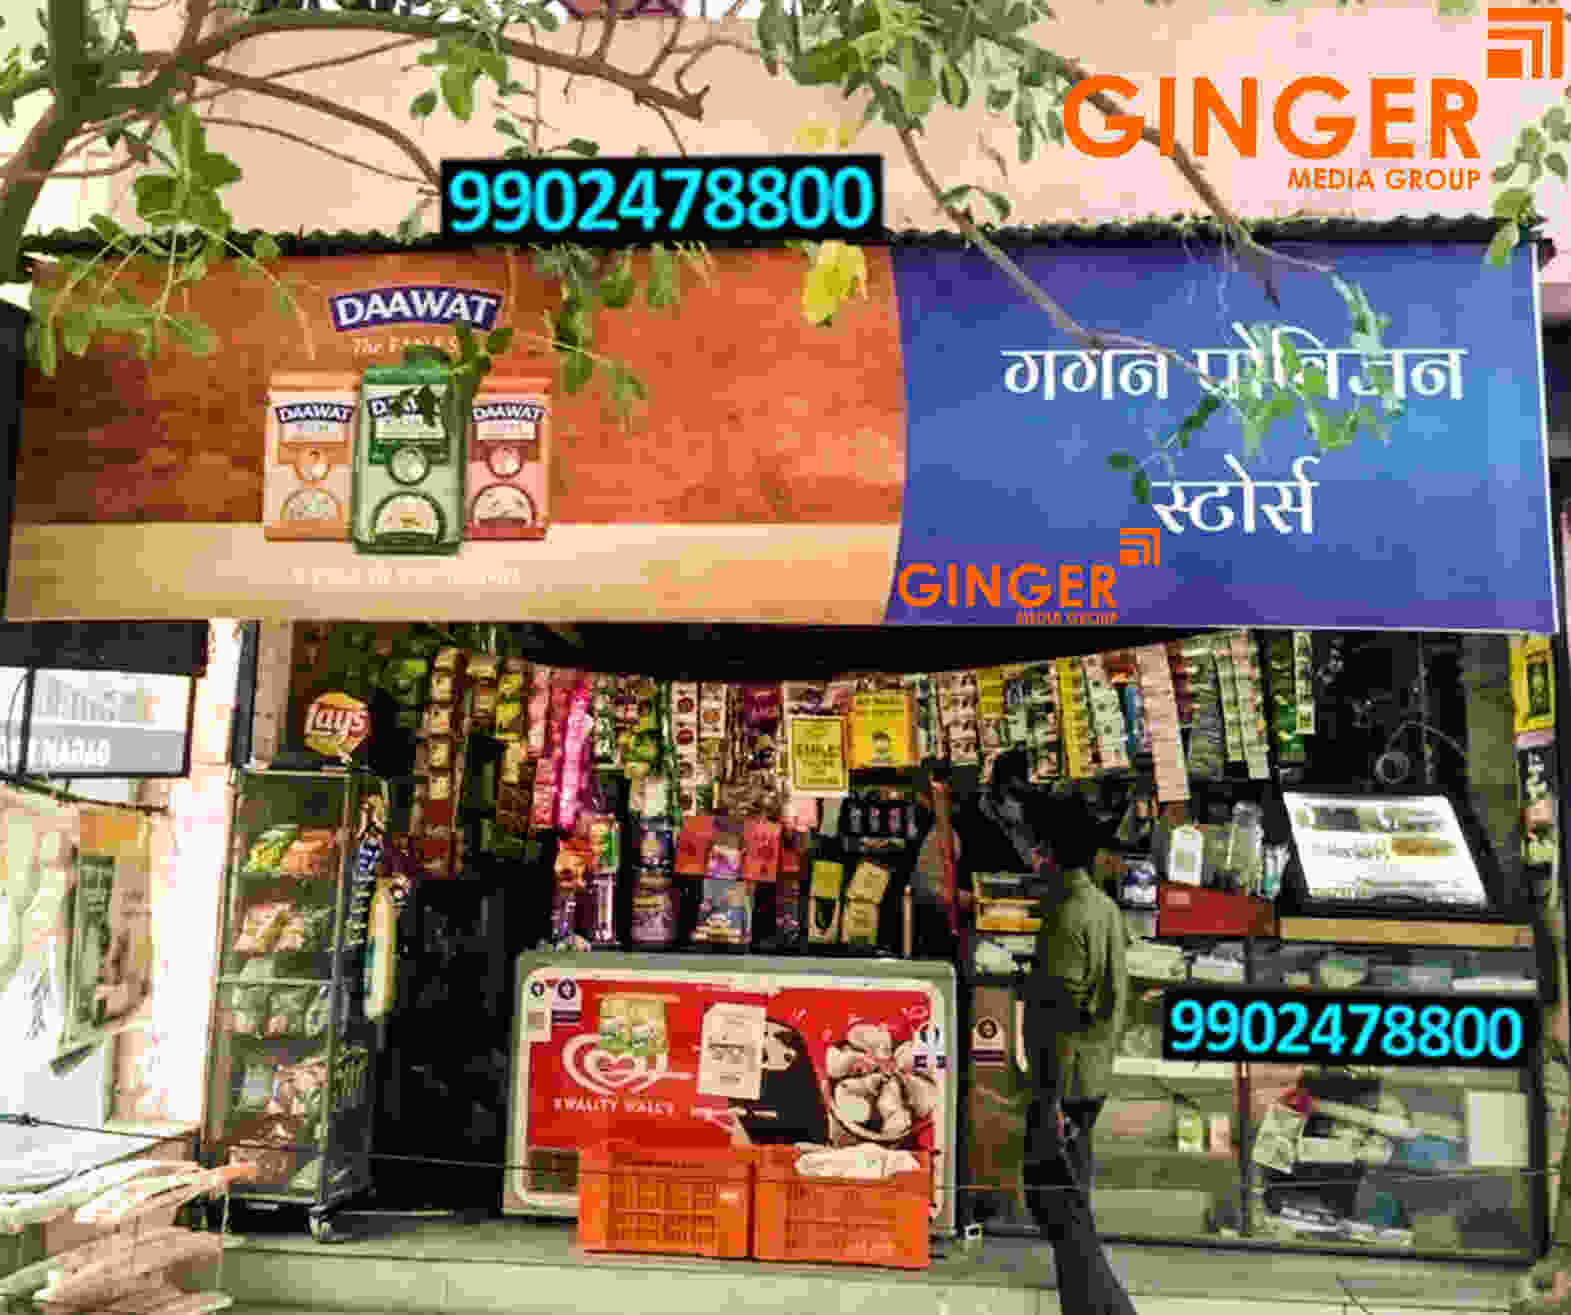 Retail Branding in India